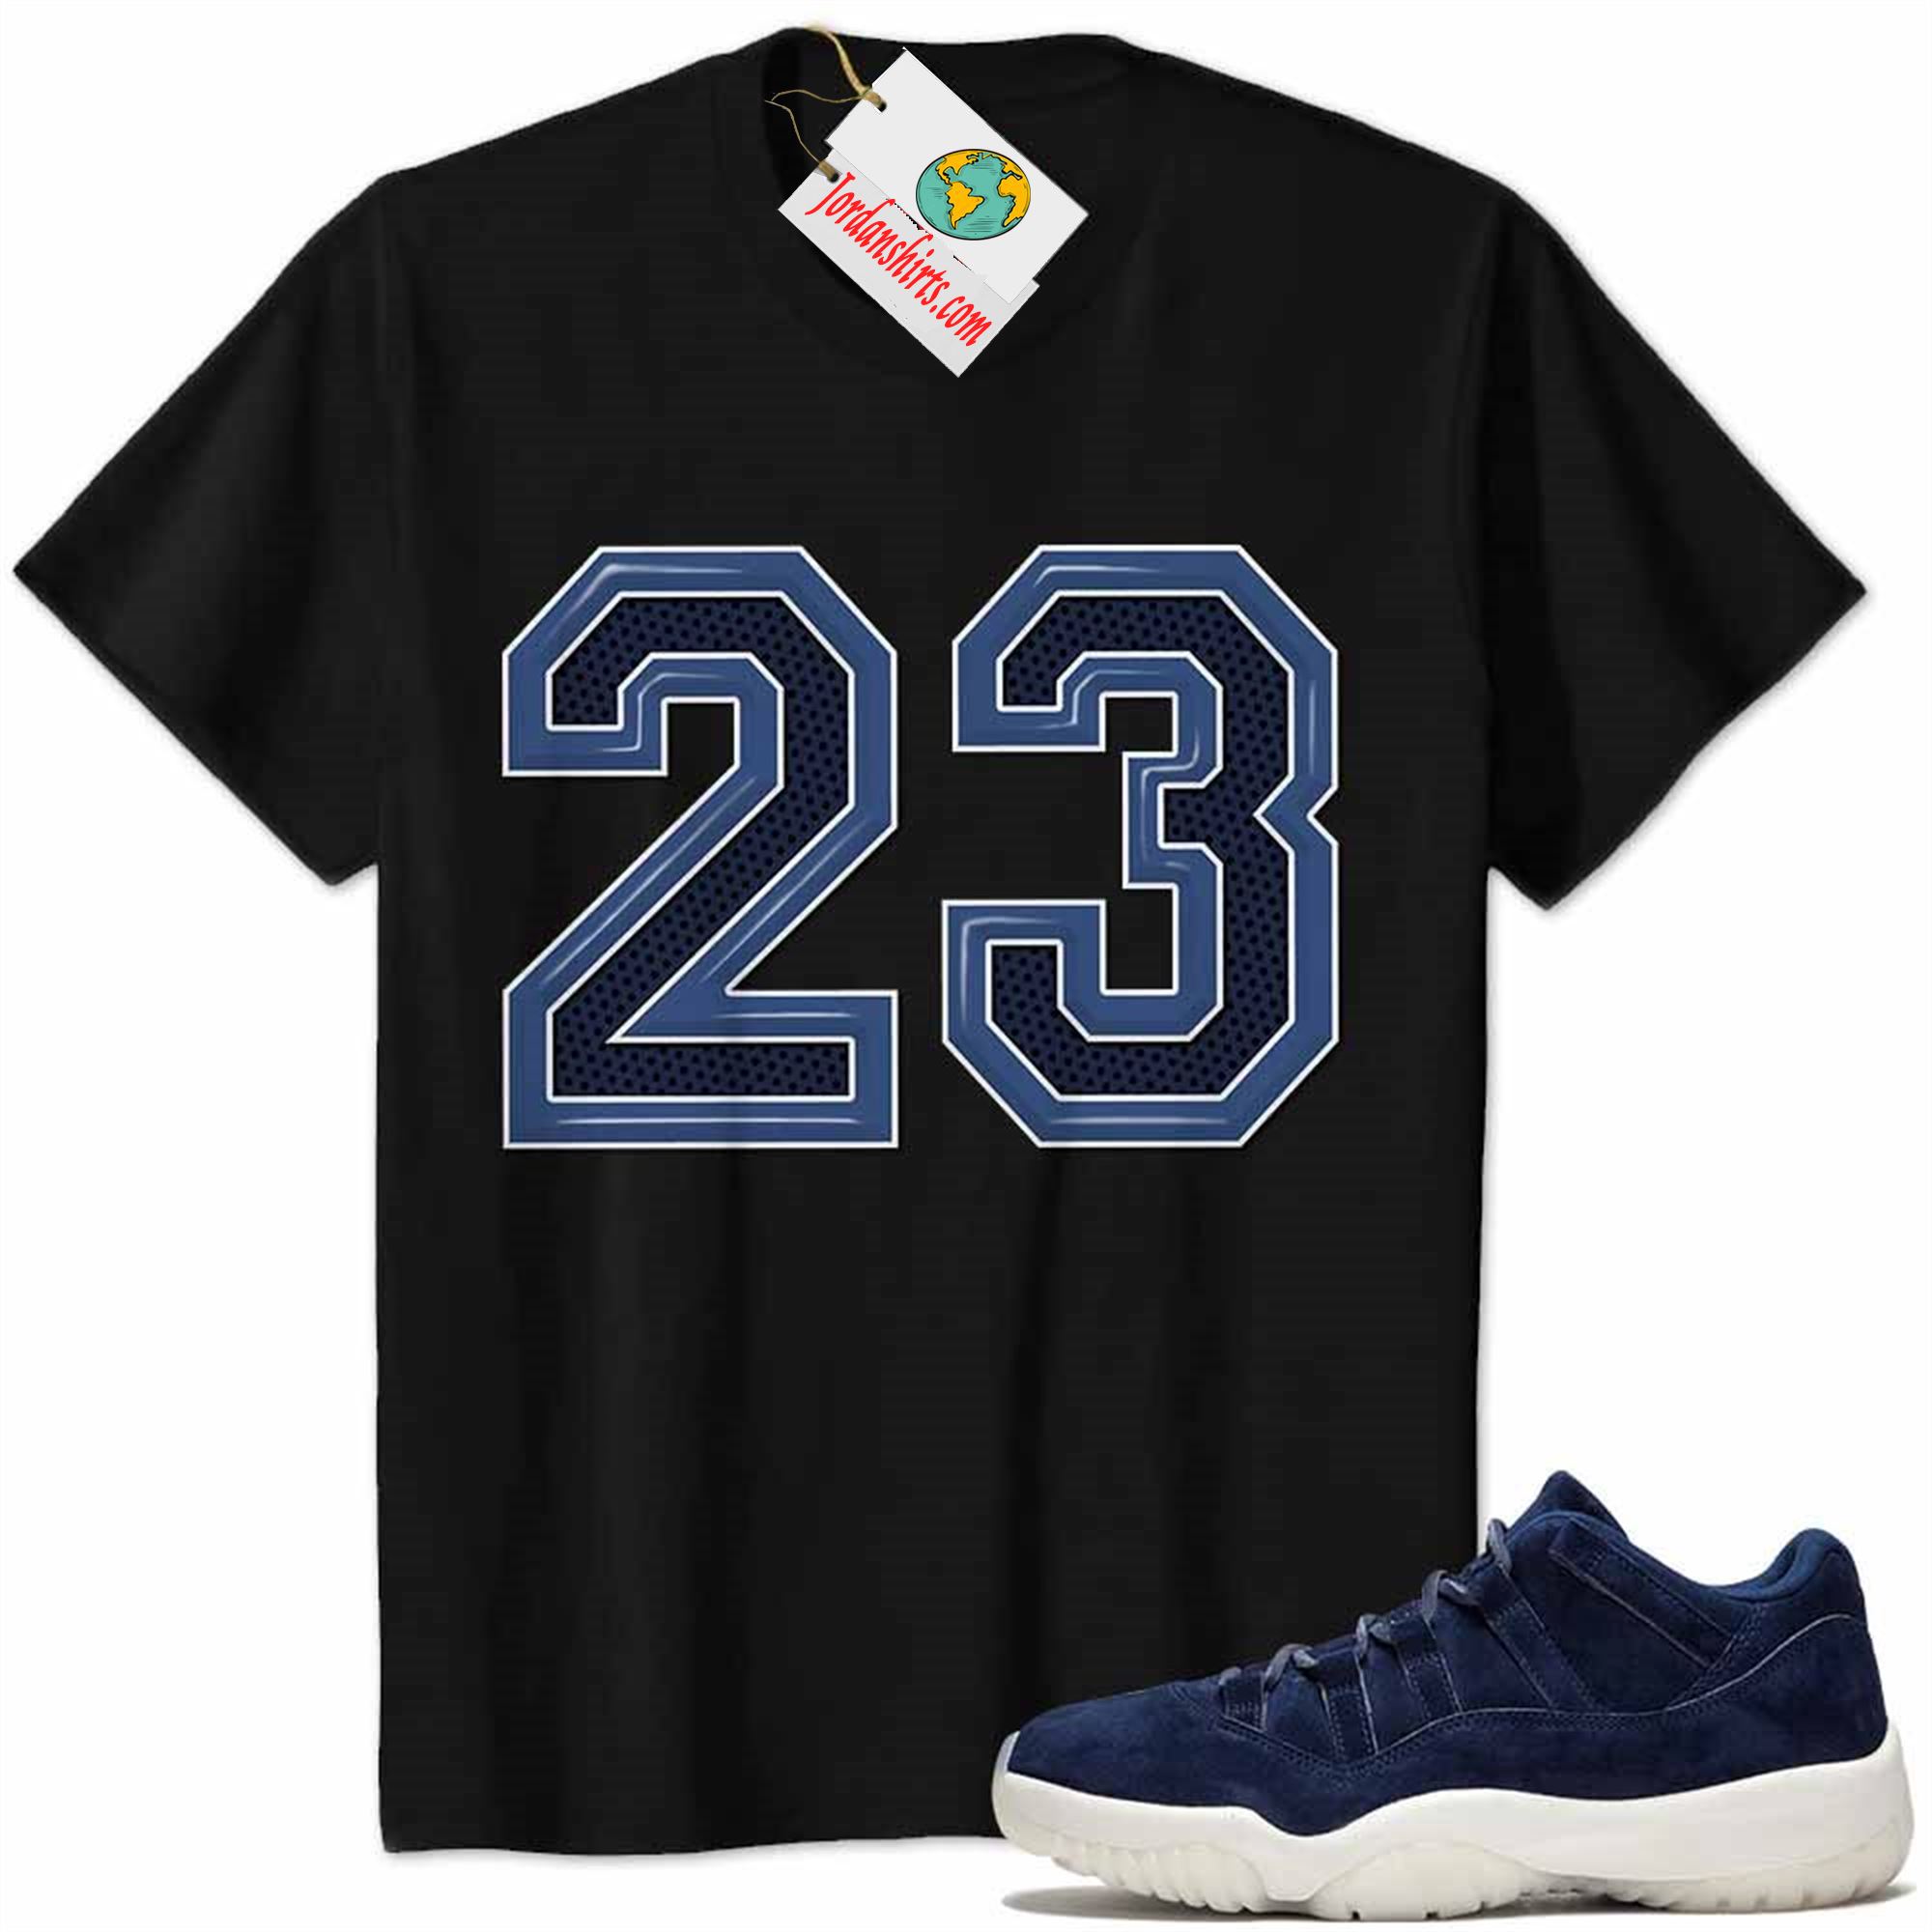 Jordan 11 Shirt, Jordan 11 Derek Jeter Shirt Michael Jordan Number 23 Black Size Up To 5xl